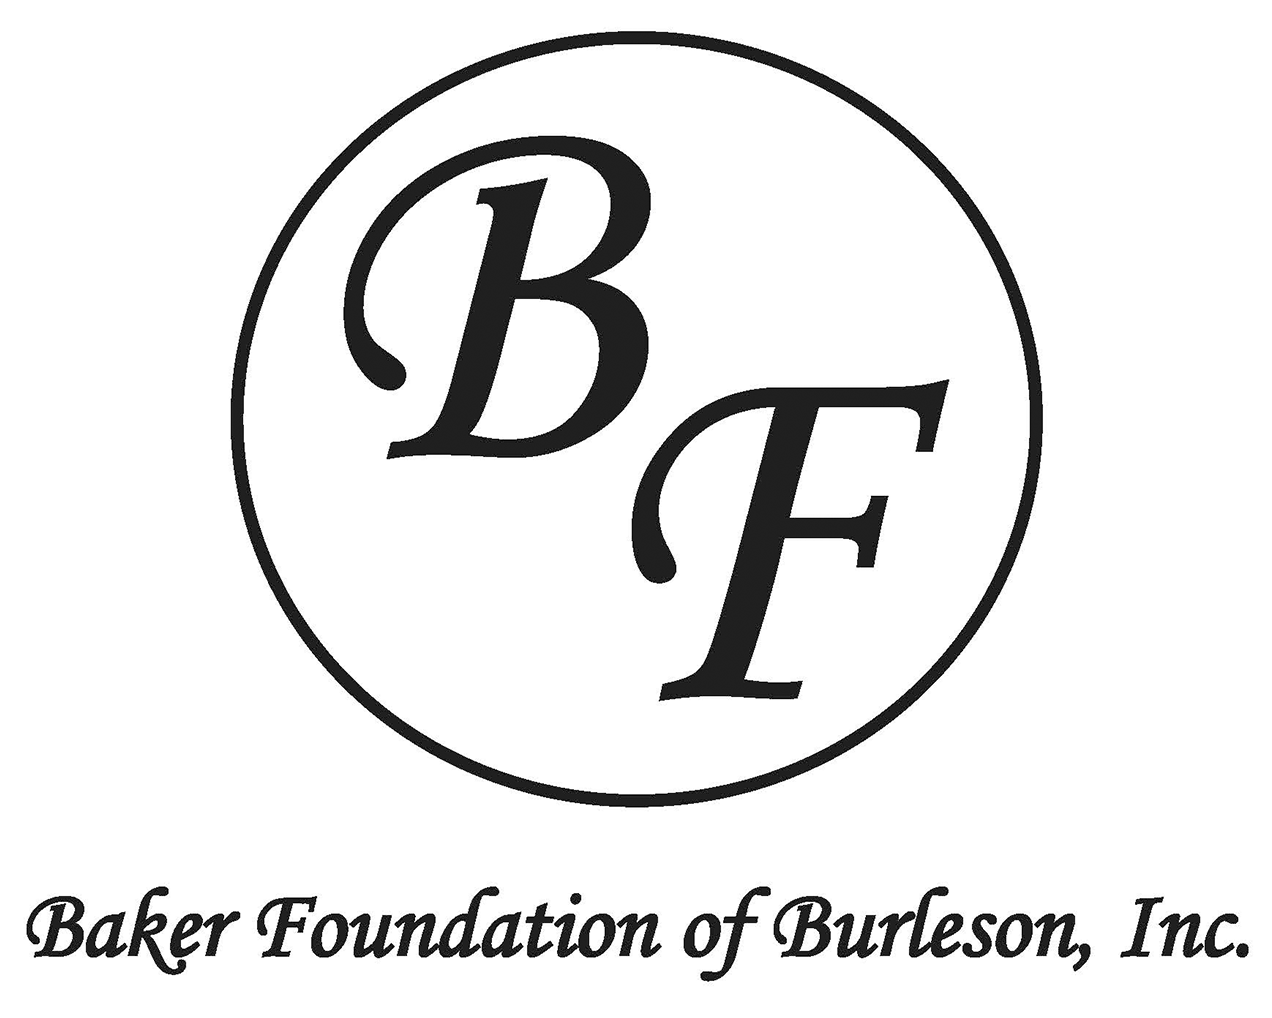 The Baker Foundation